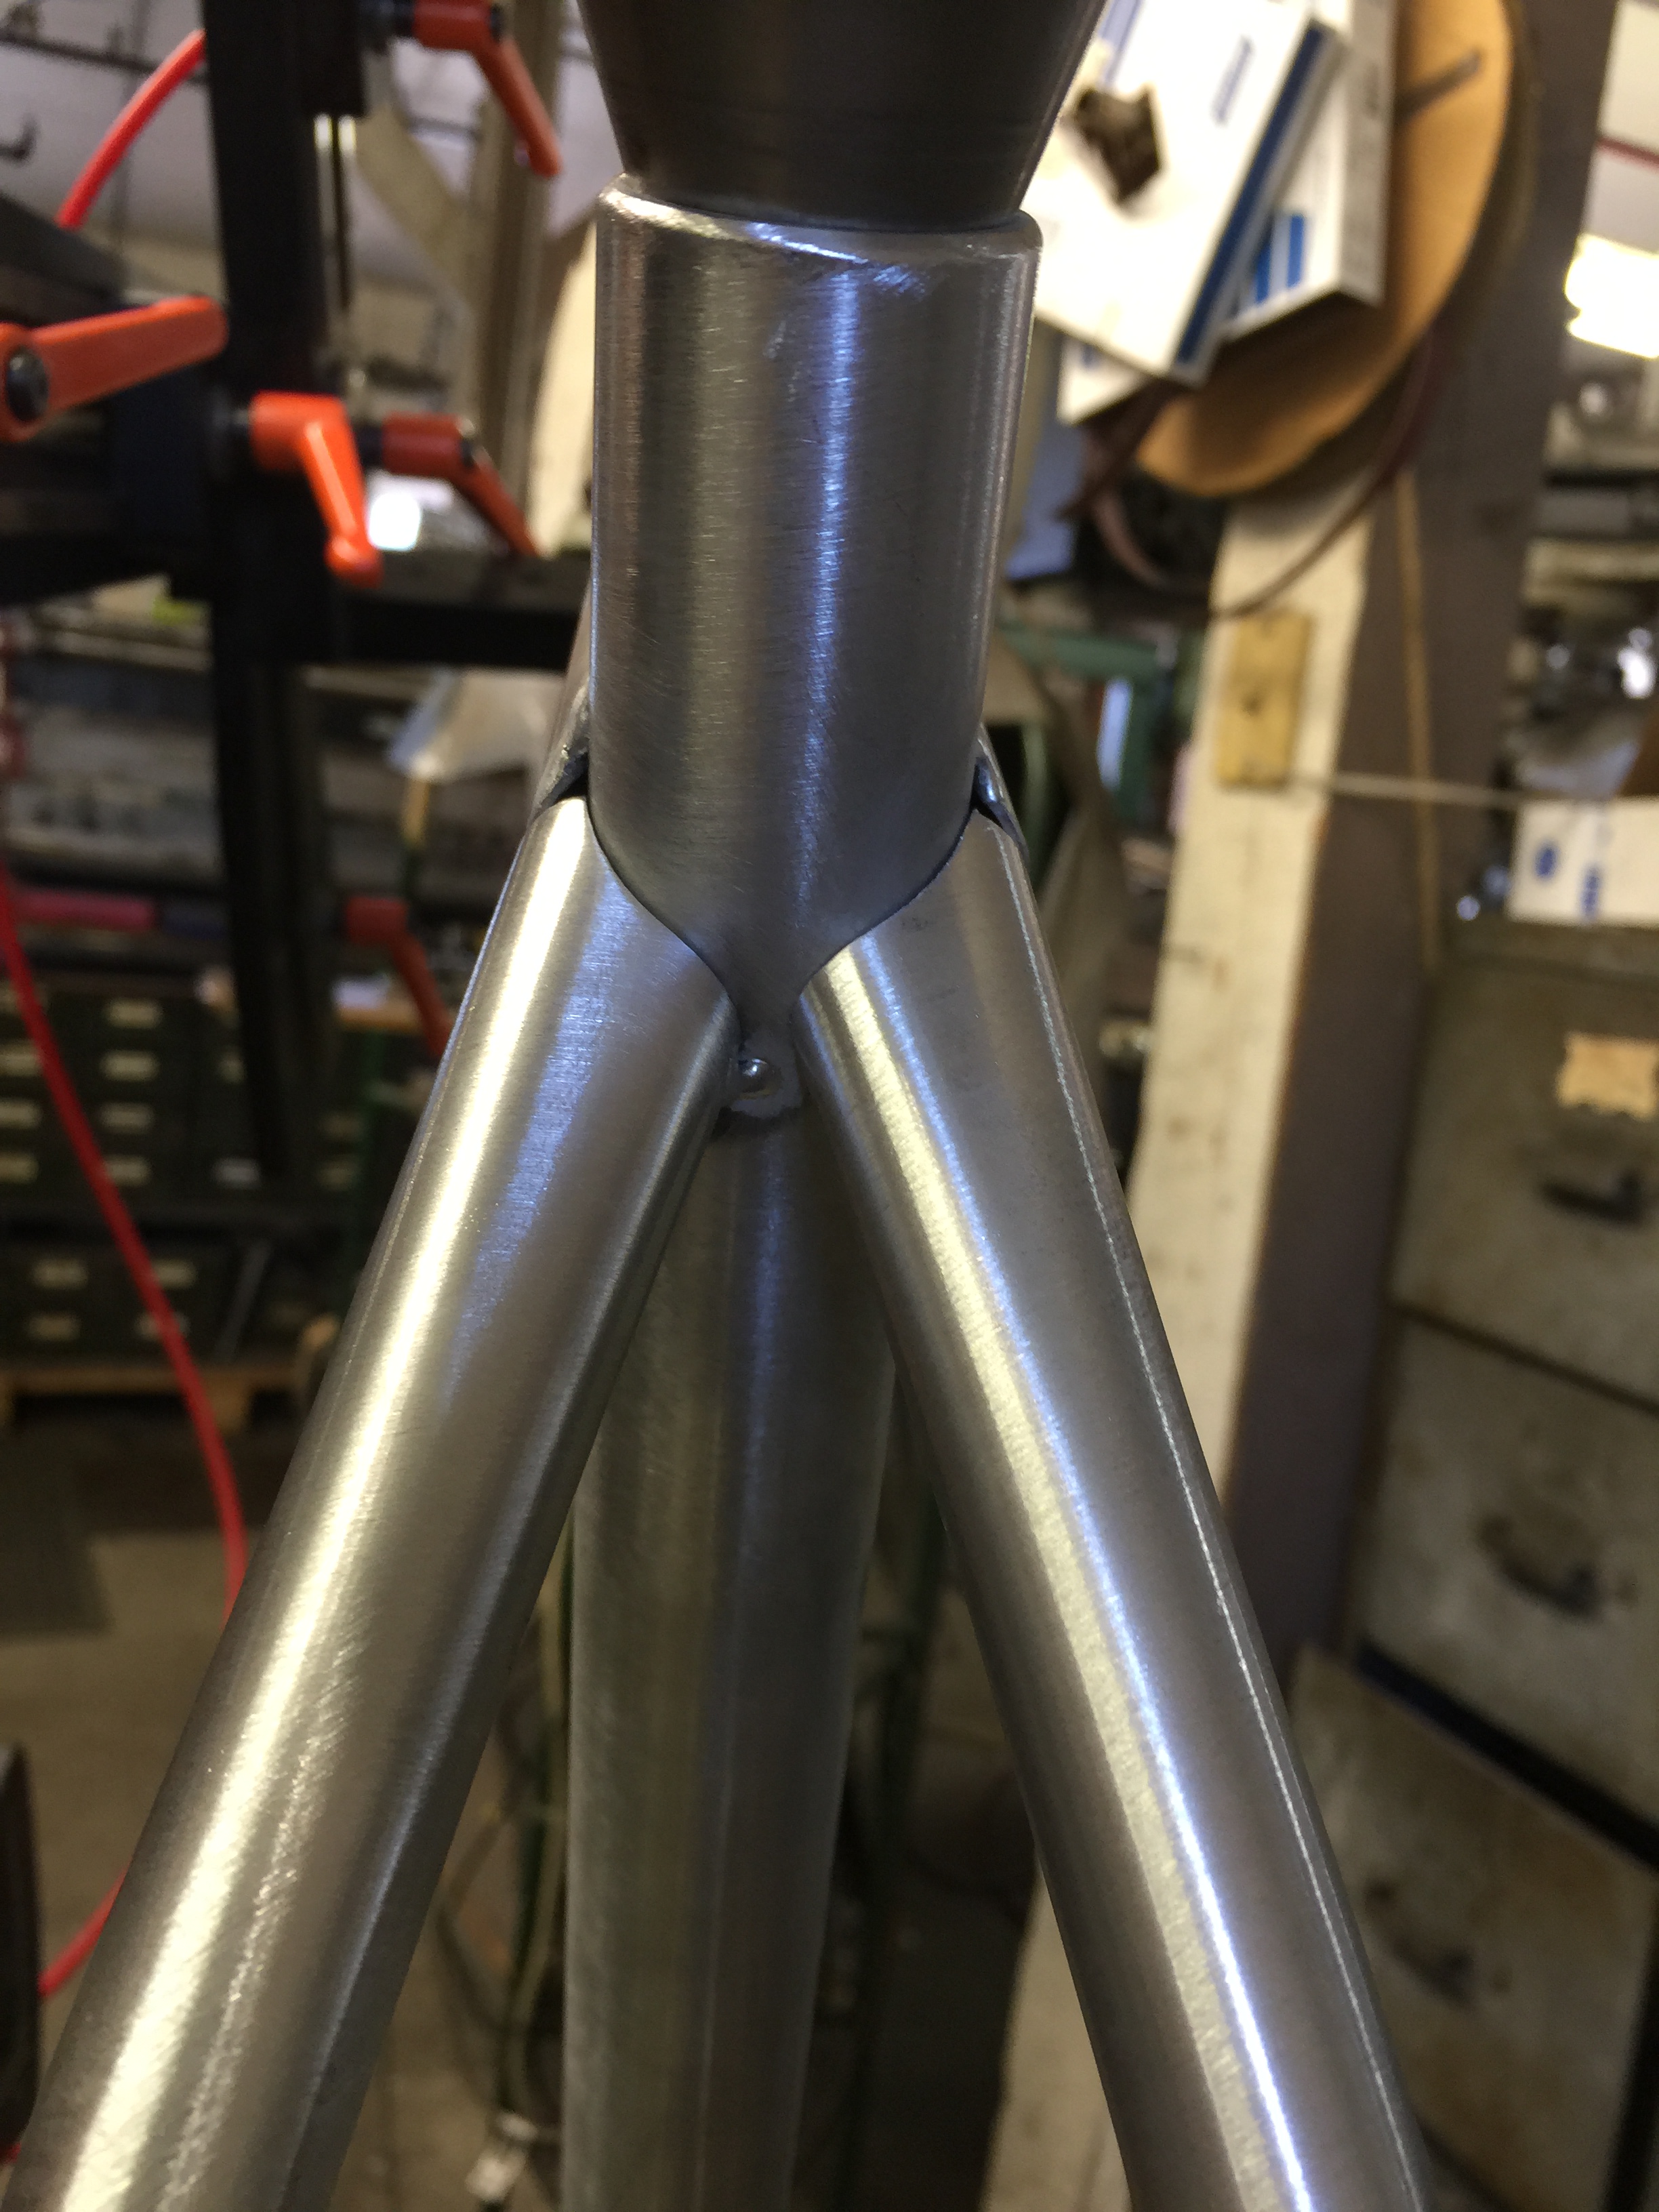 weld your own bike frame